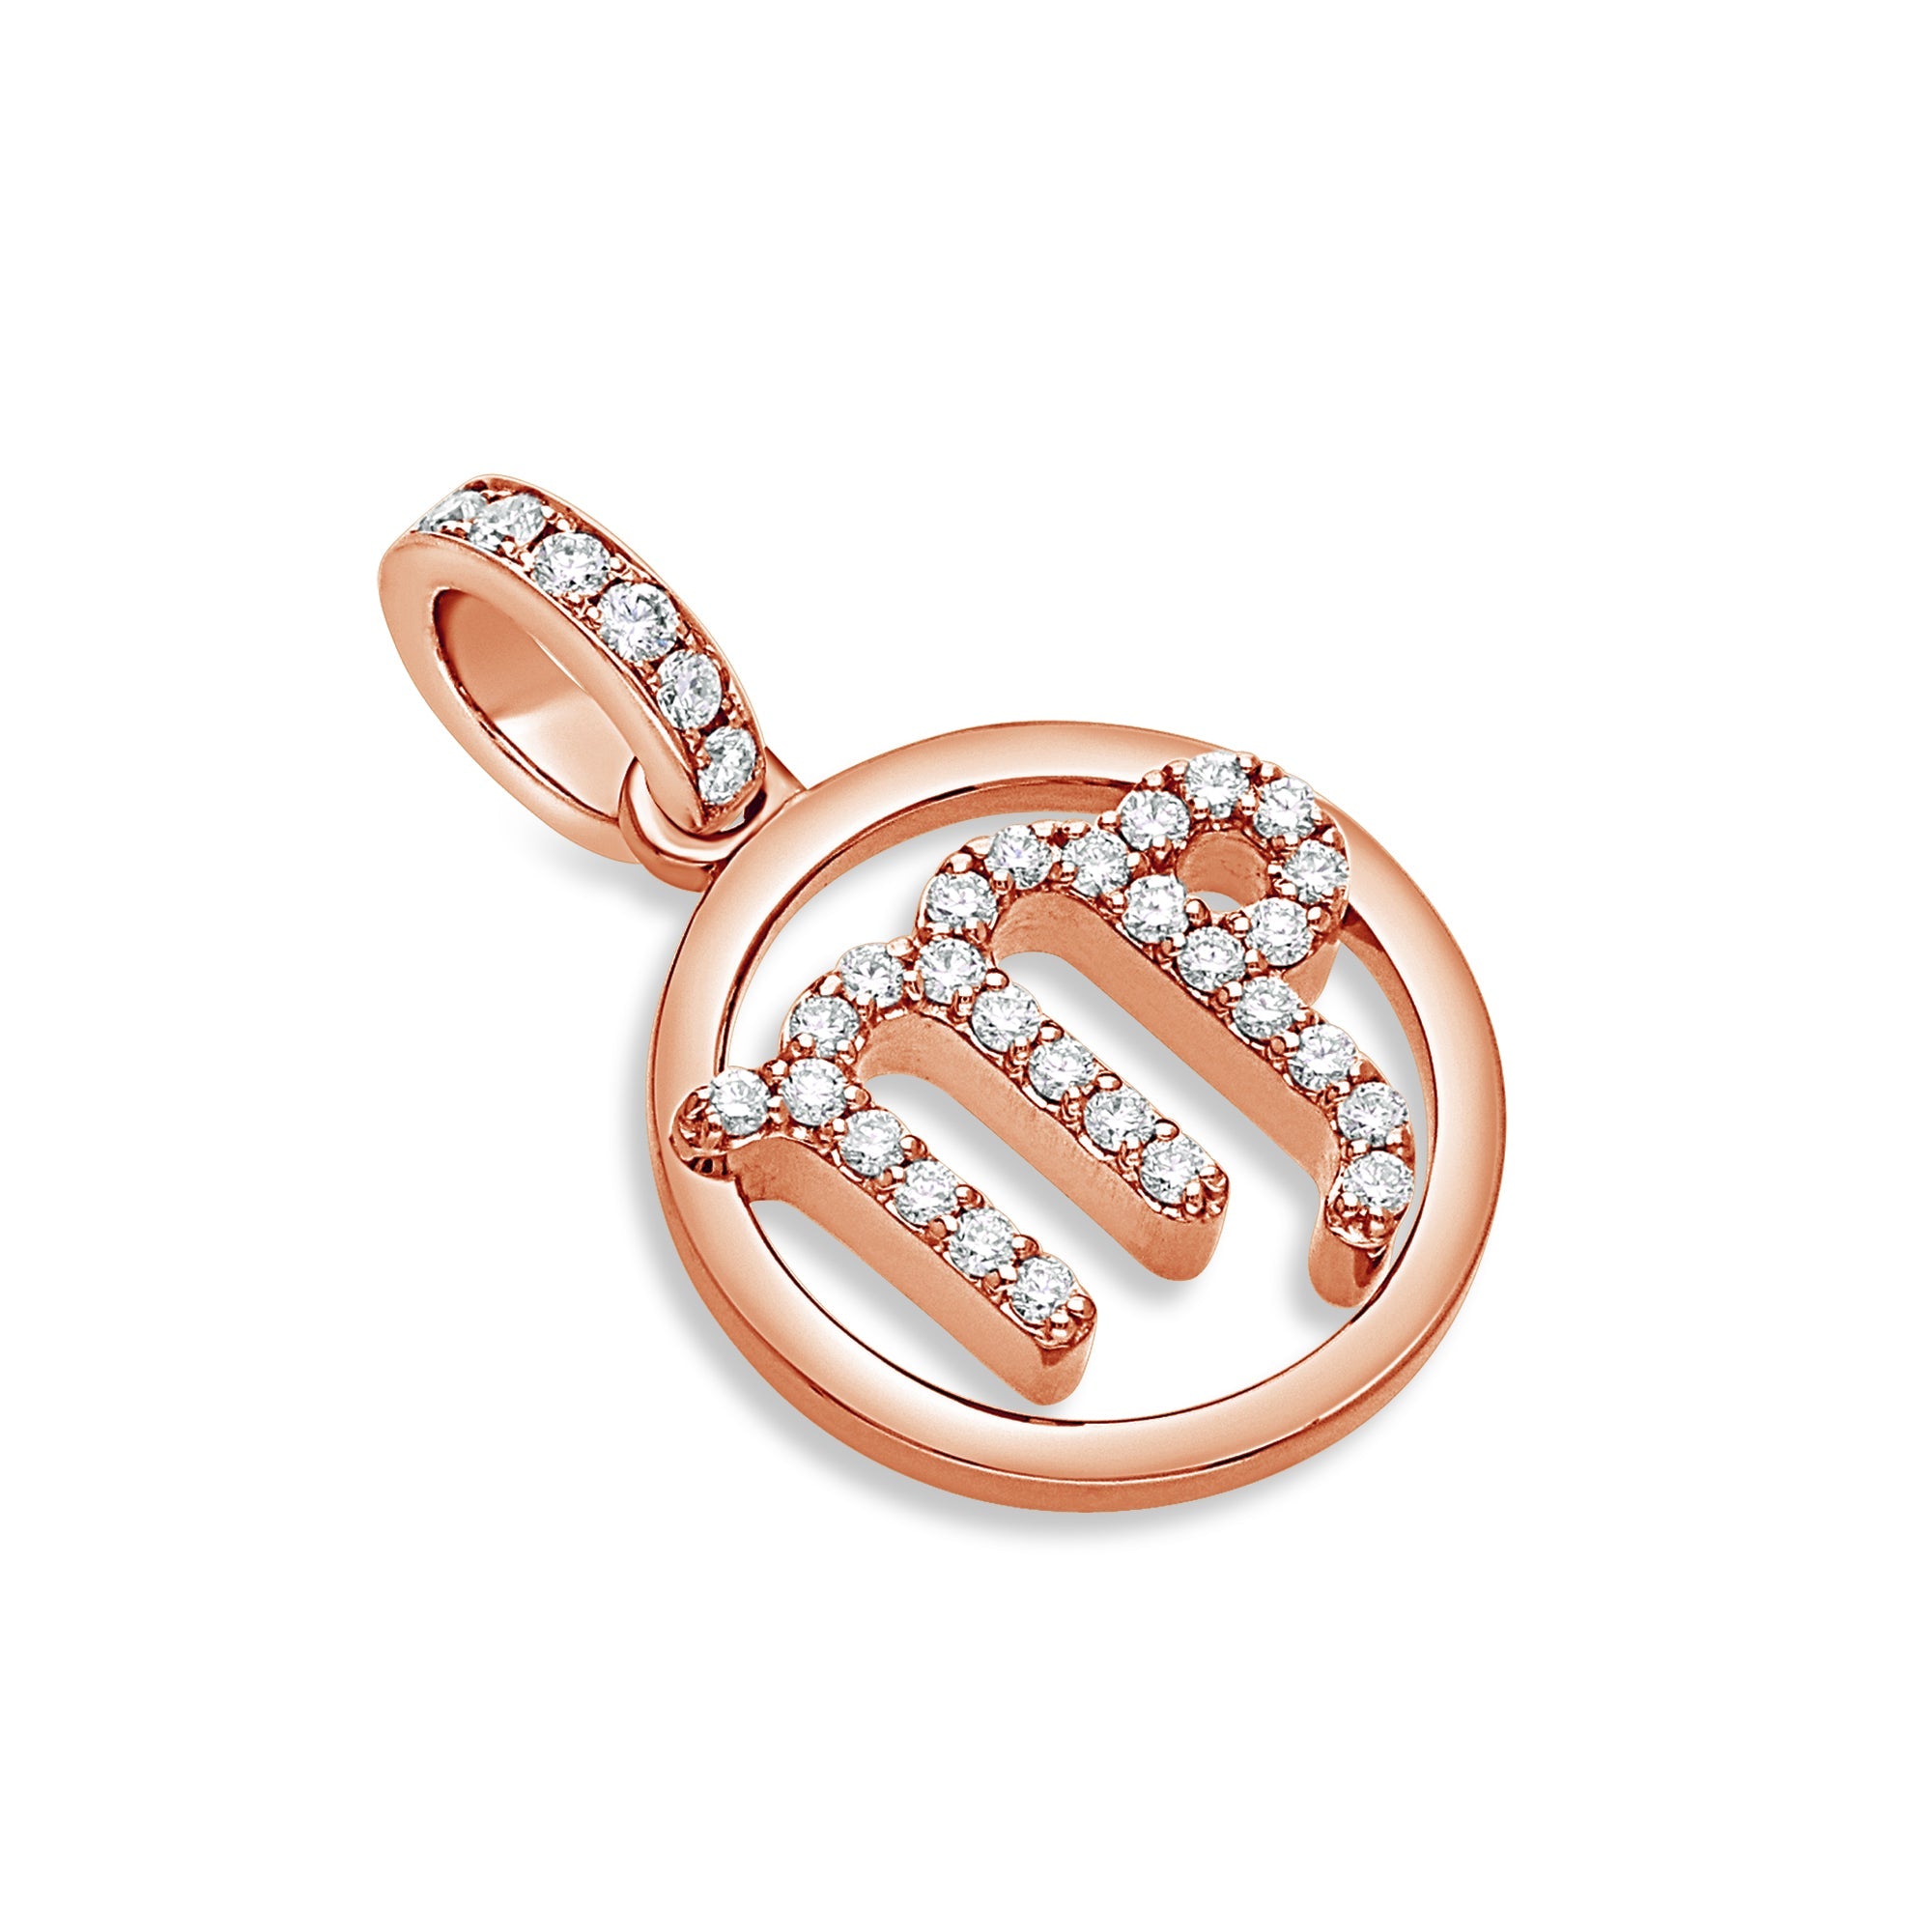 Nano Zodiac Necklace: Virgo (14K ROSE GOLD) - IF & Co. Custom Jewelers